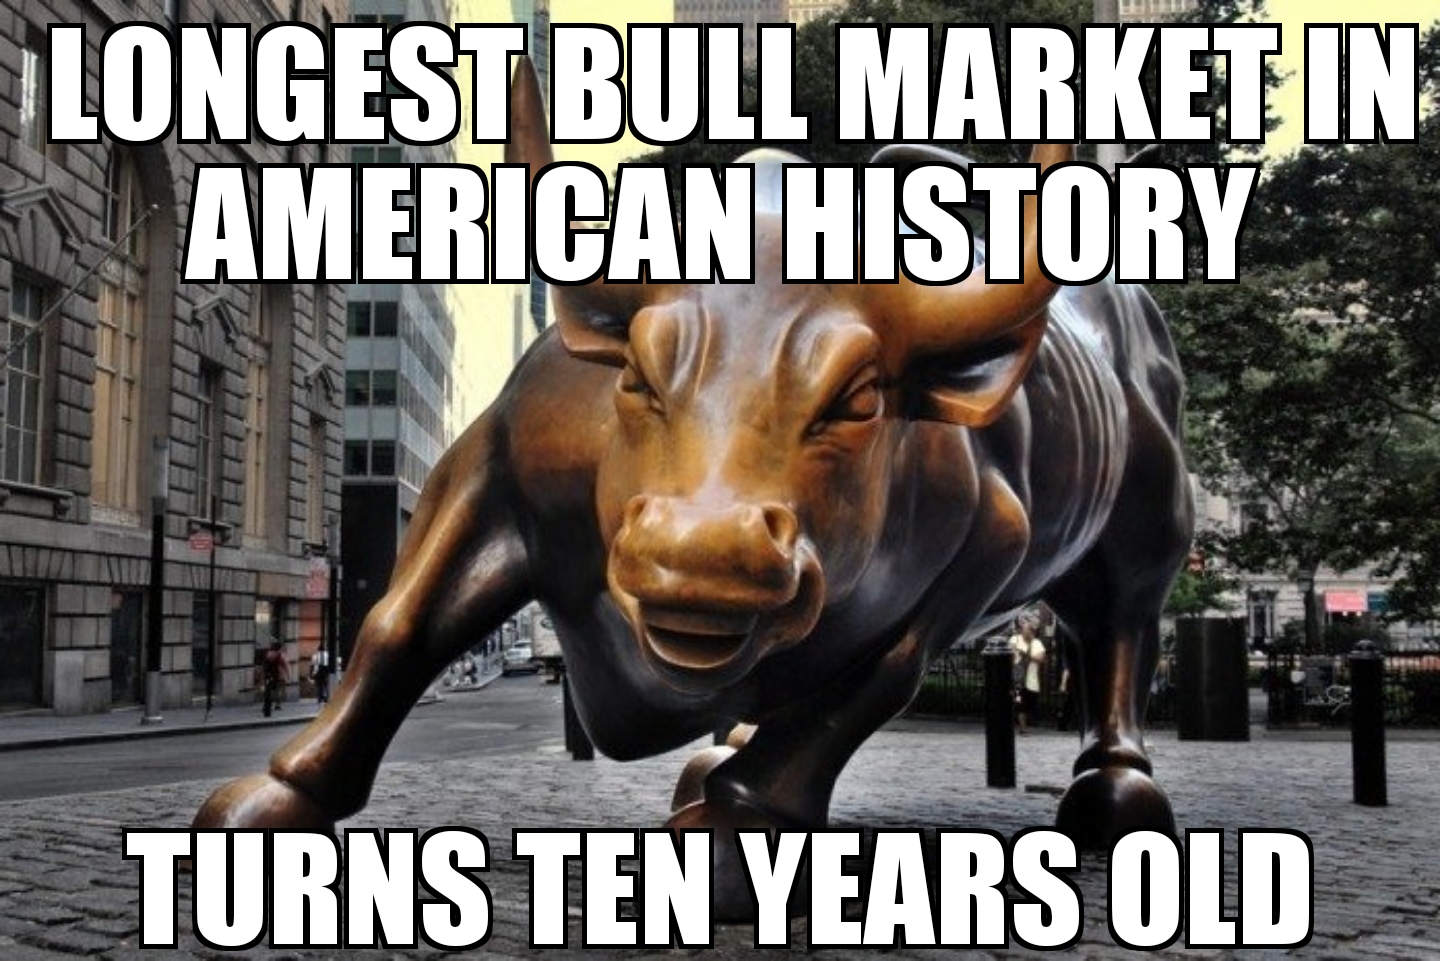 Bull market hits 10 years